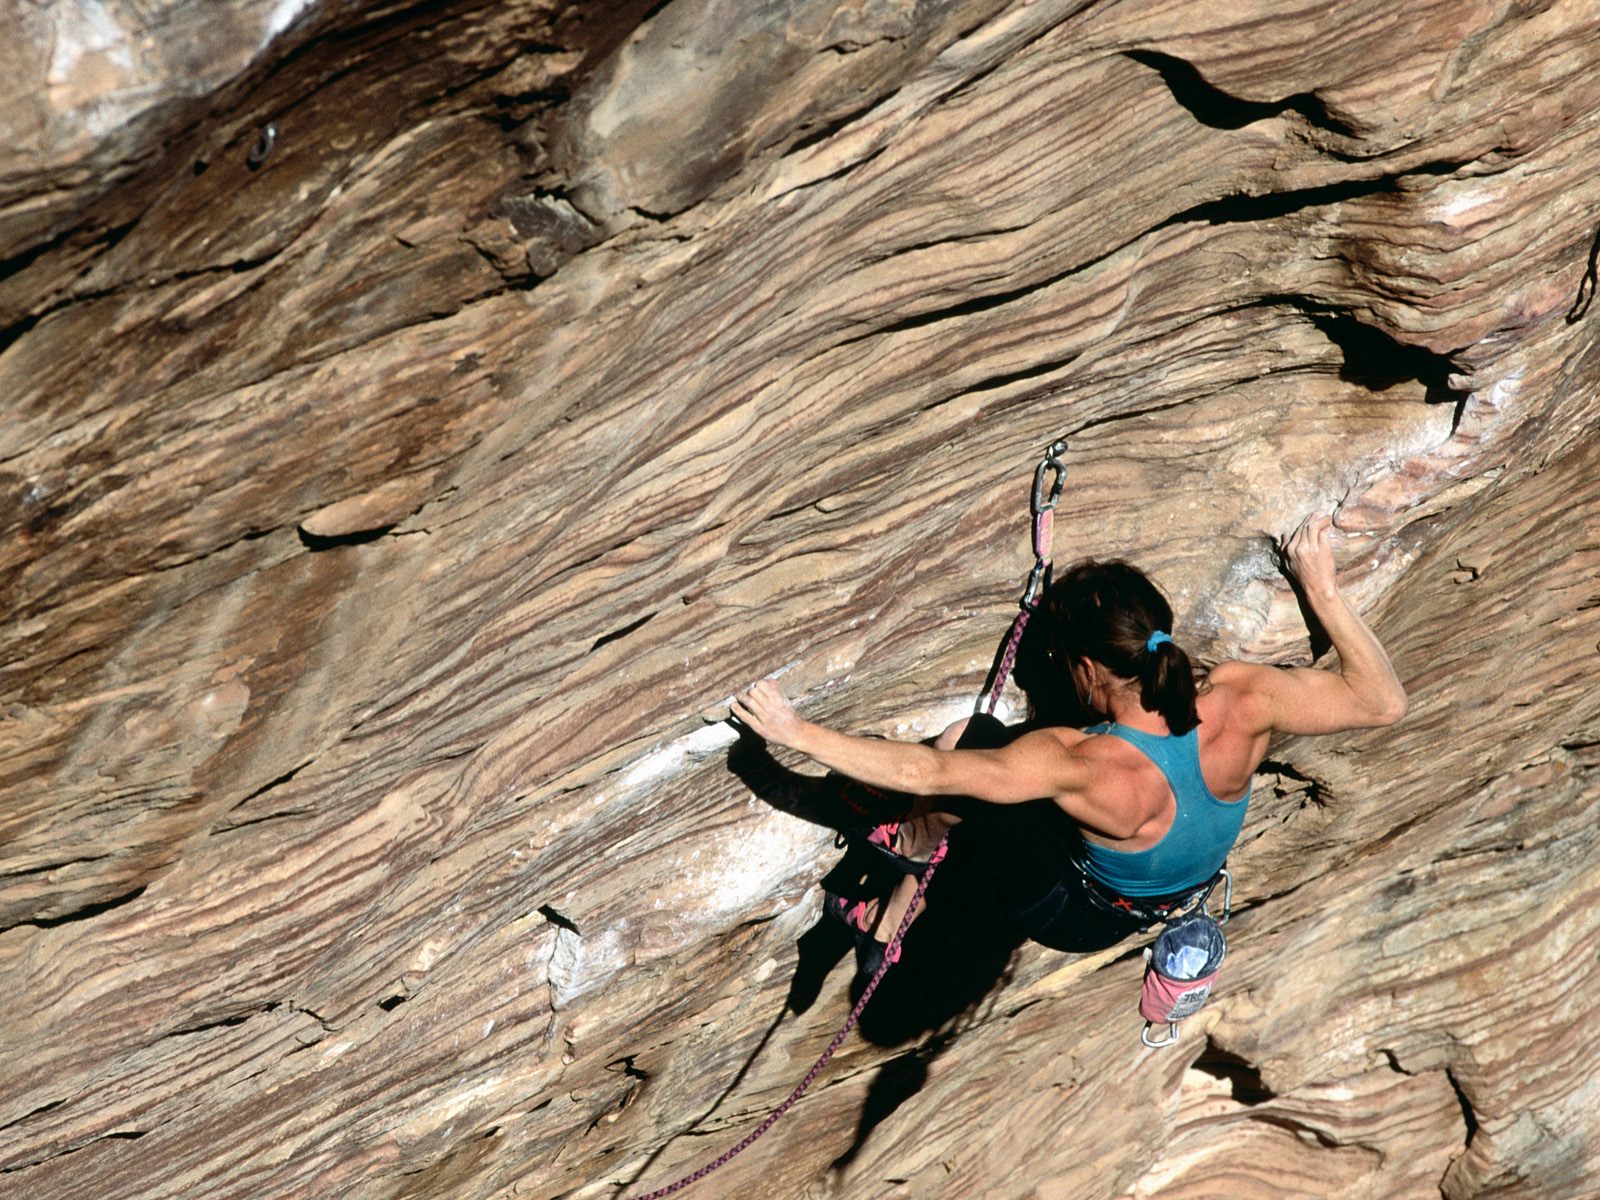 Download High quality Climbing wallpaper / Sports / 1600x1200